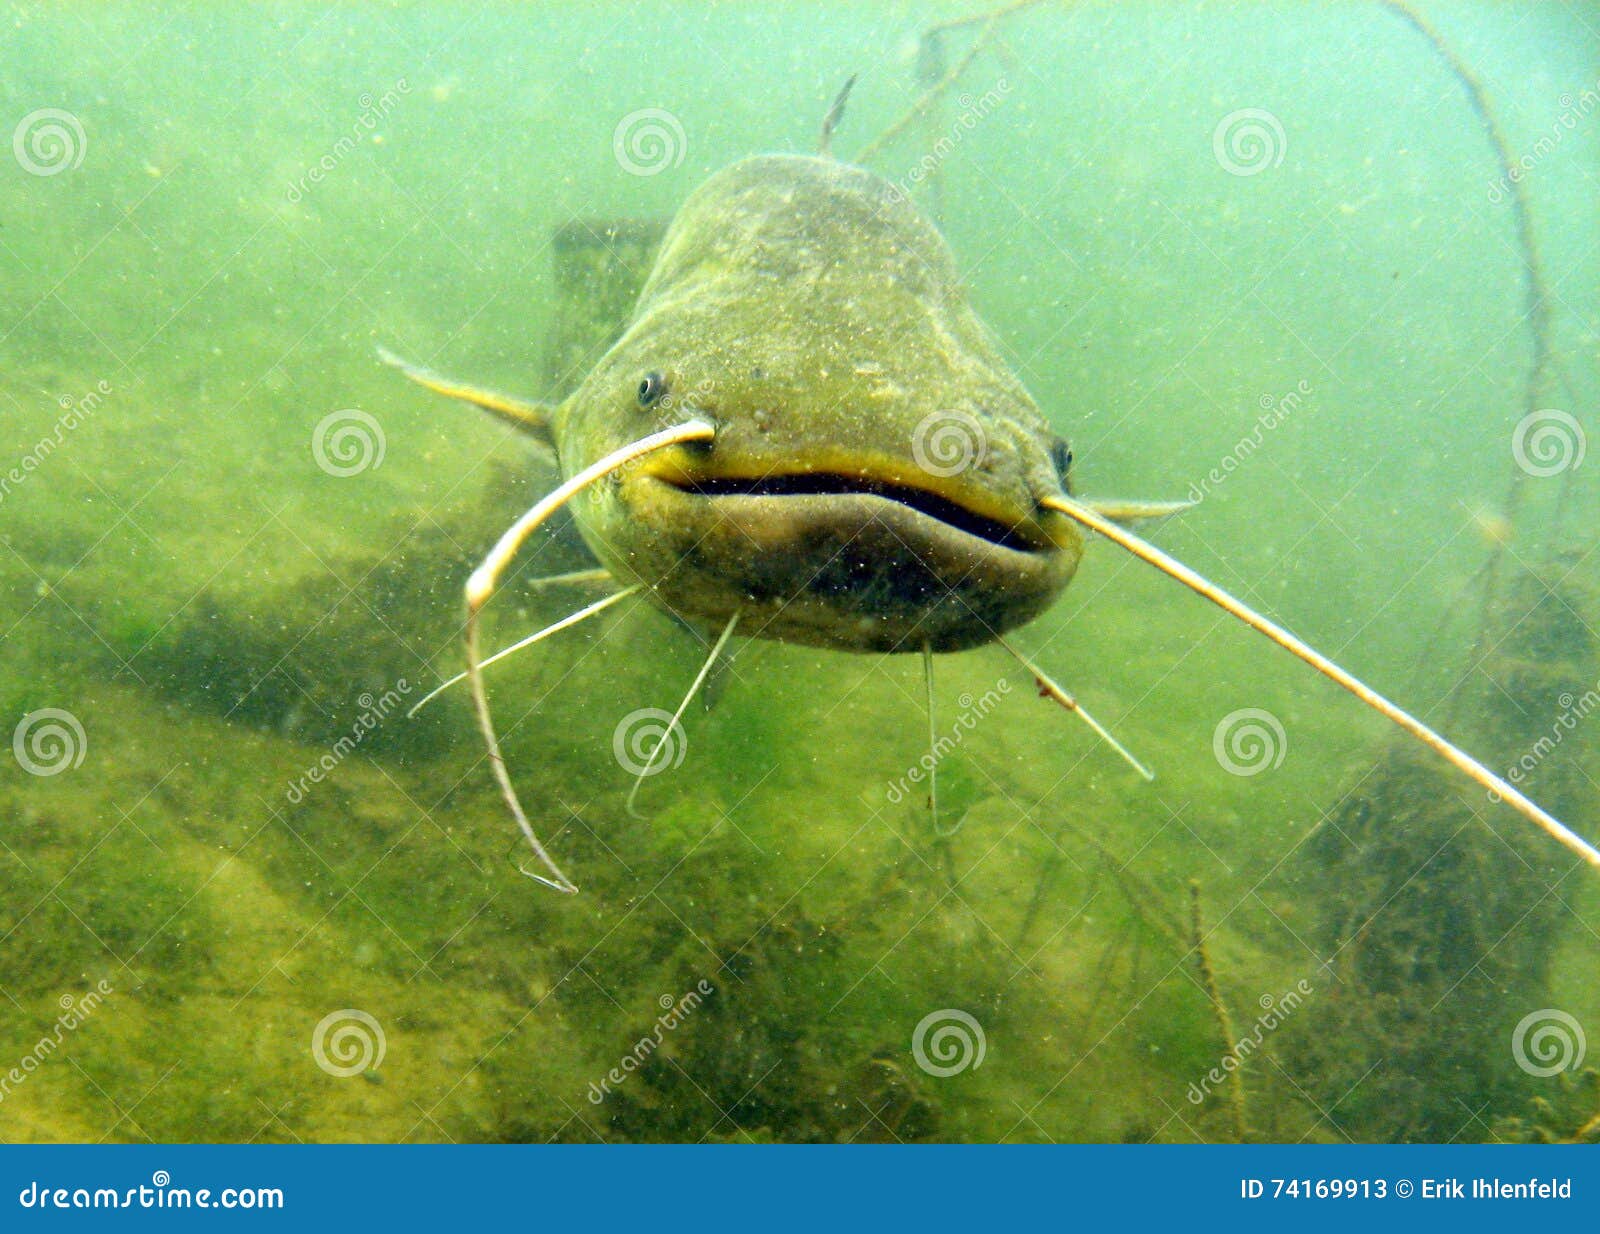 catfish in natural environment